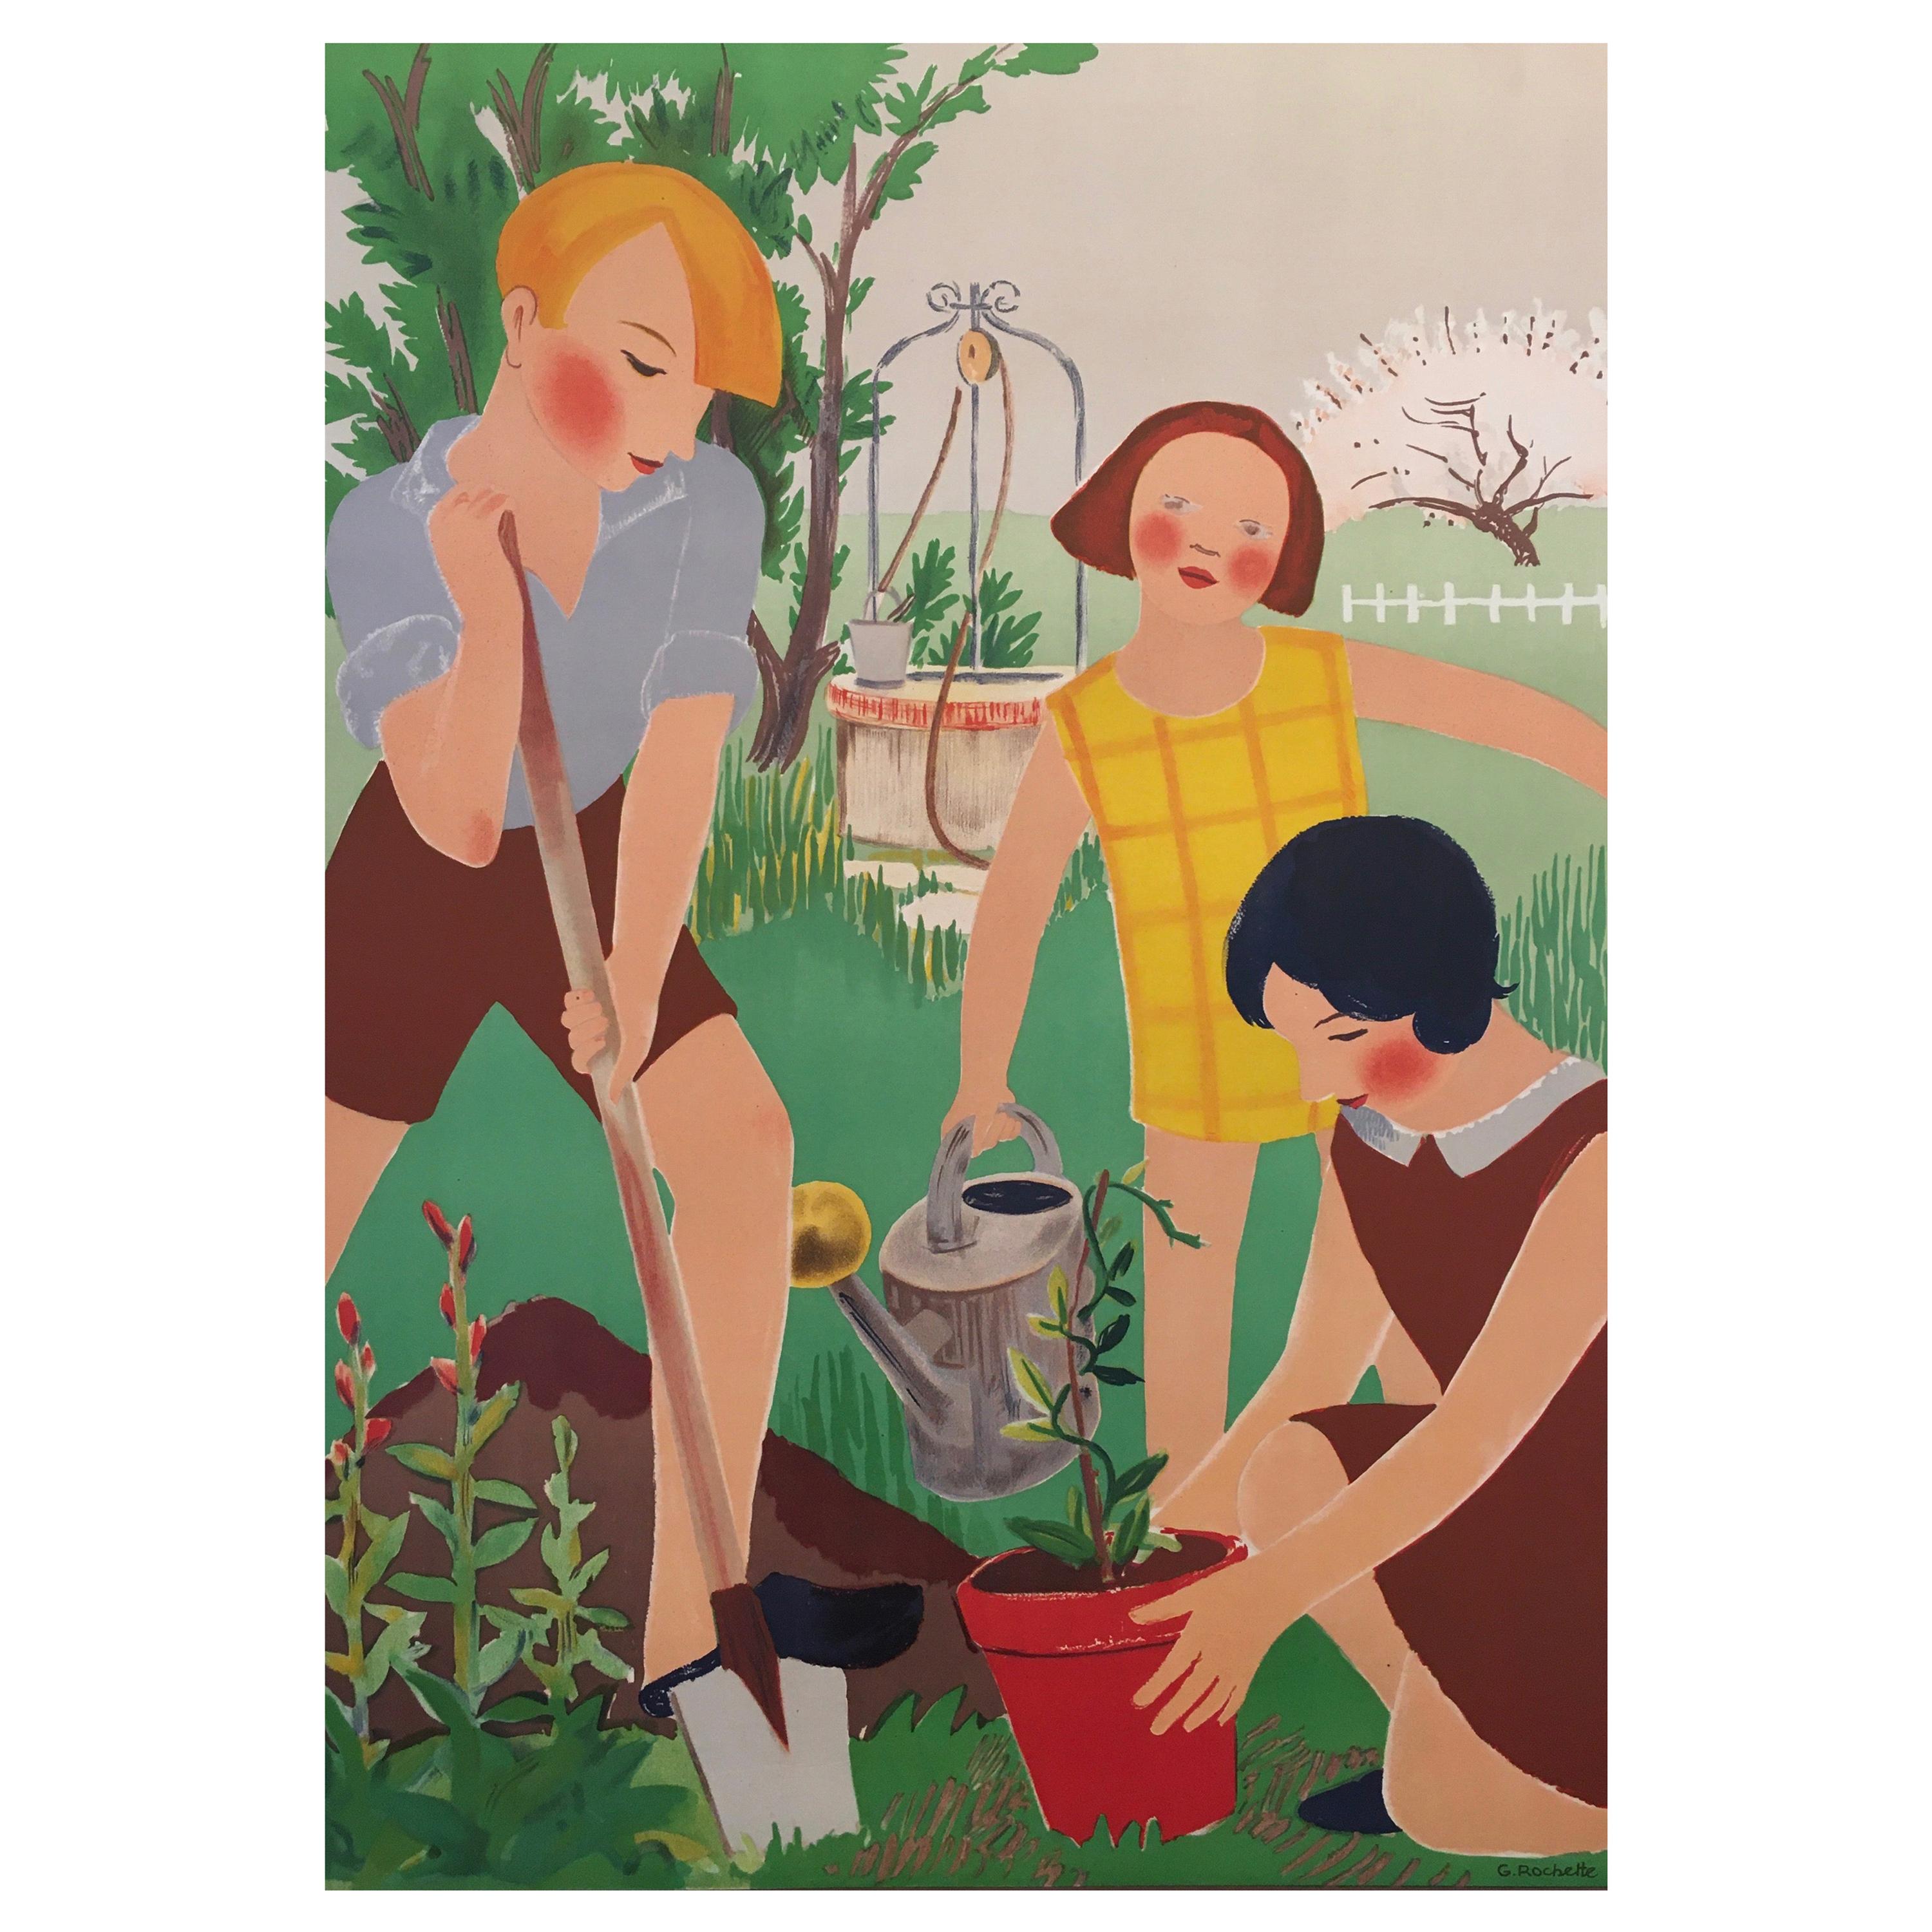 Original Vintage Art Deco Gardening Poster, 'L’ Art L’Ecole', 1931 by R. Rochett